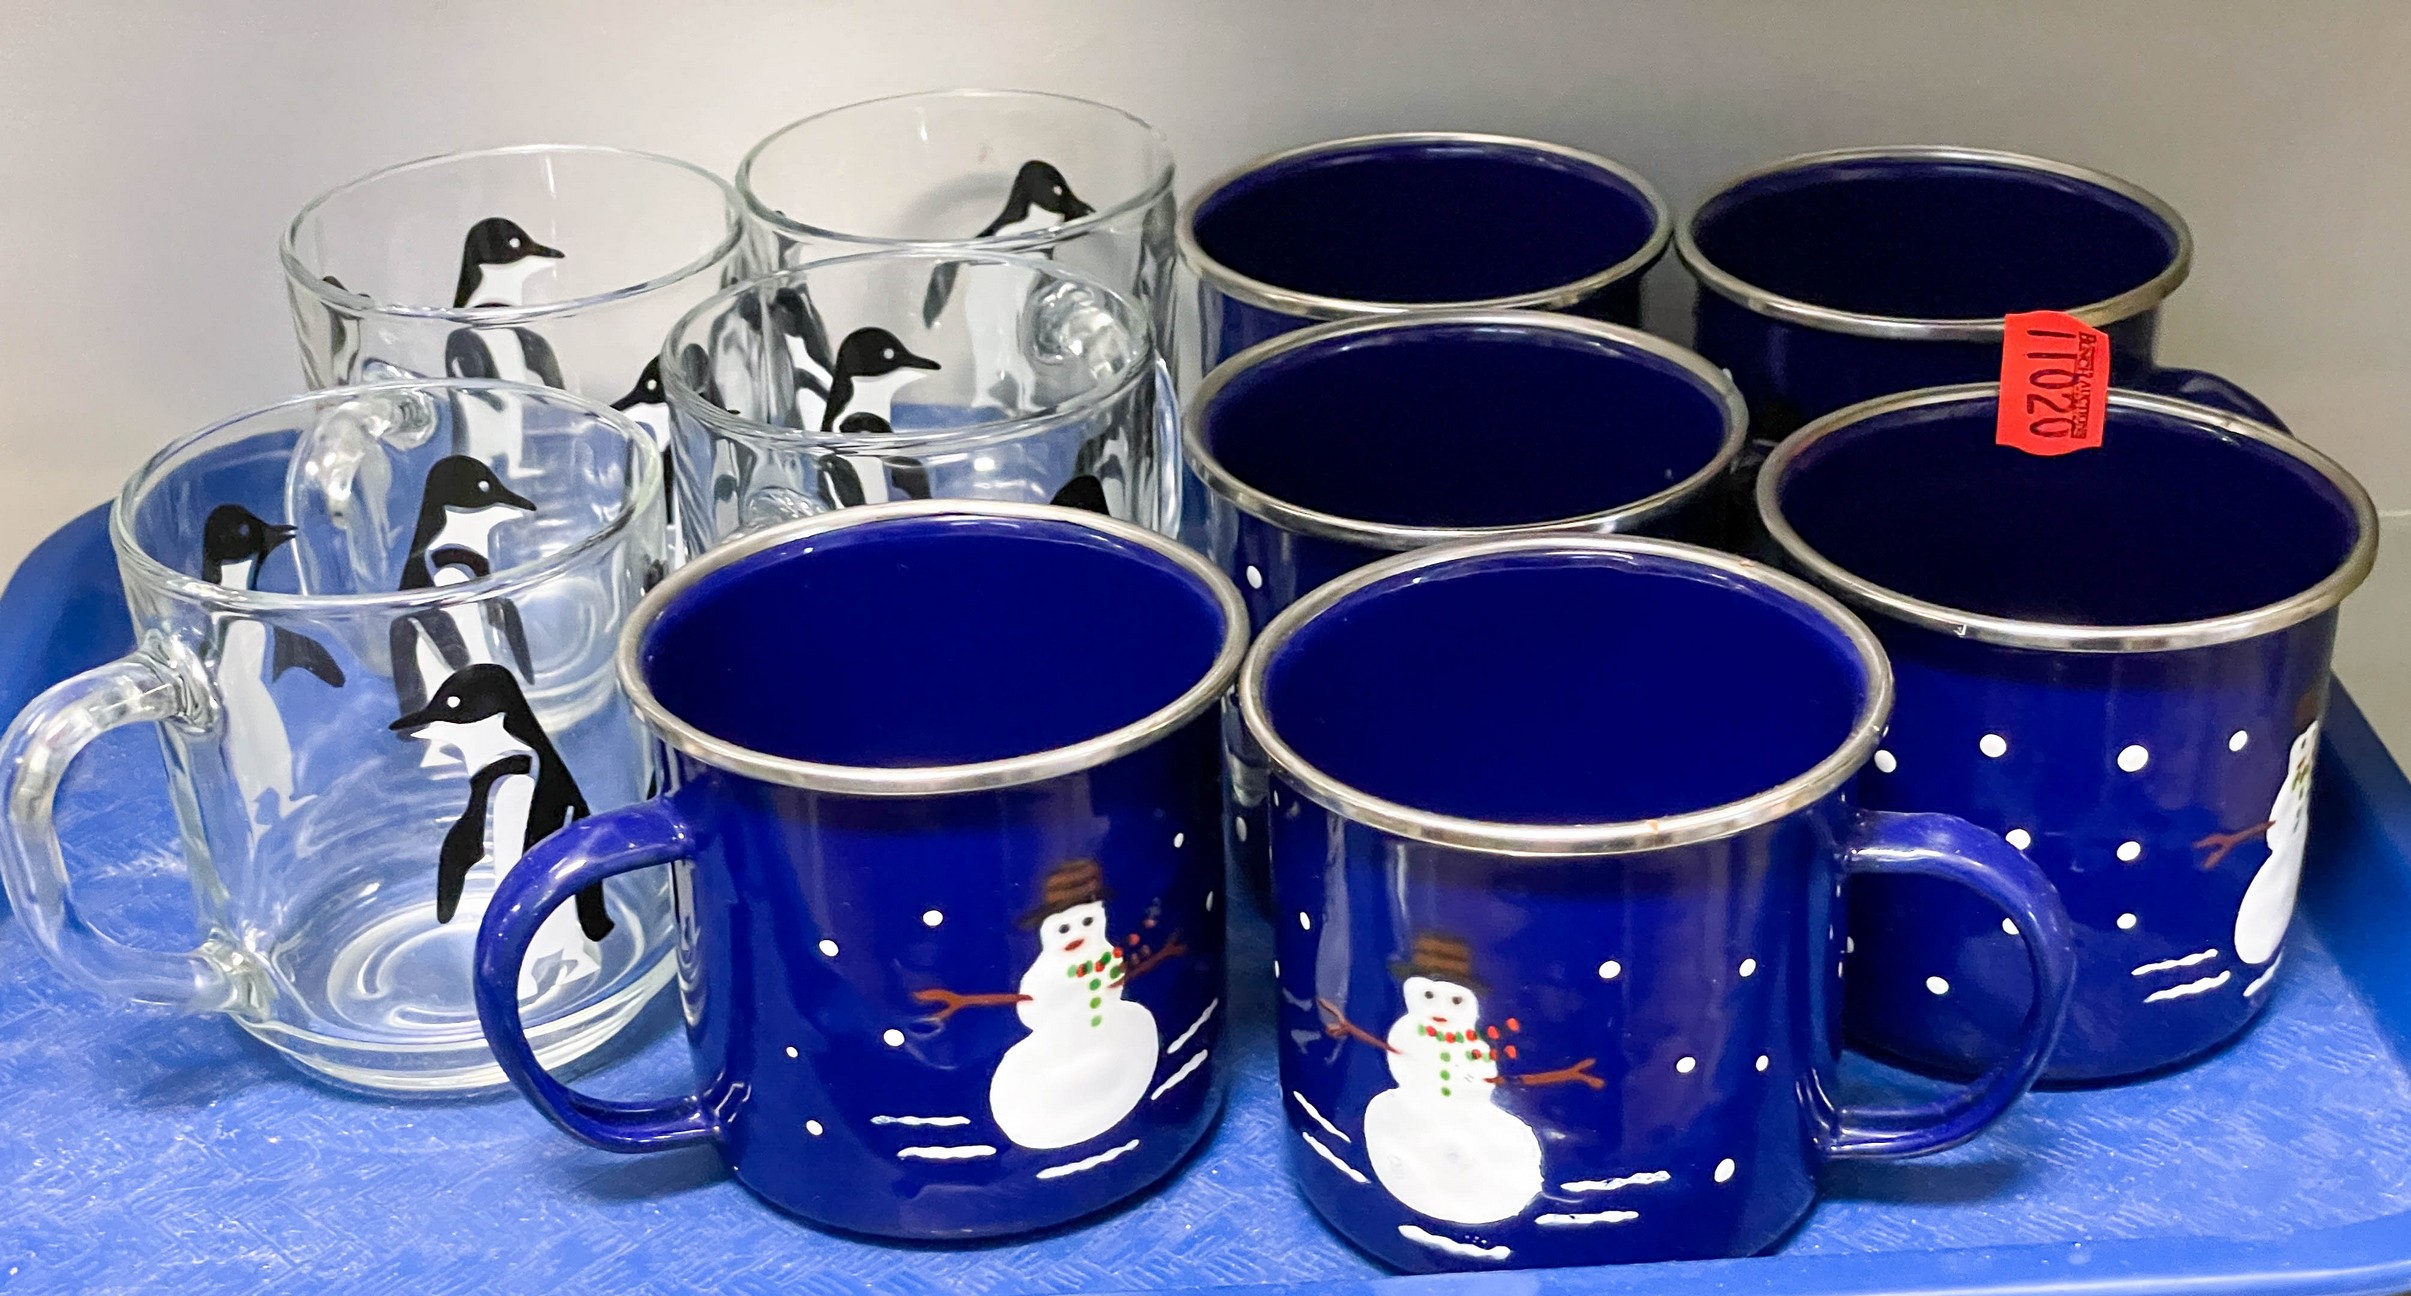  10 Hot chocolate mugs c o 6  27819c